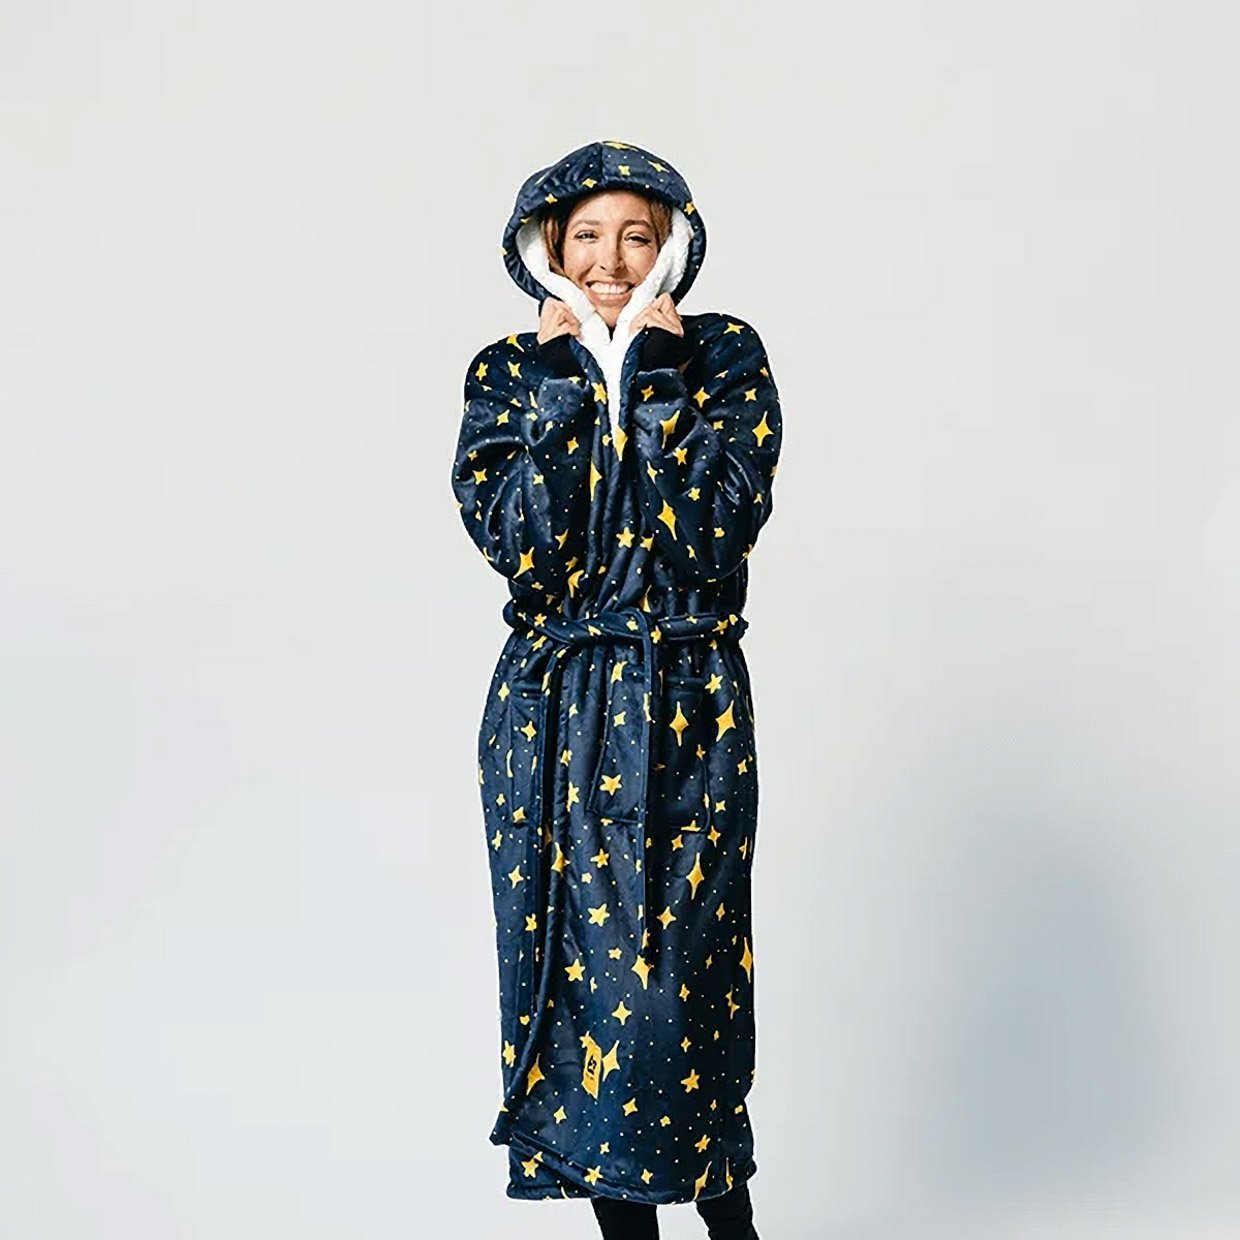 Hideout Robe™ – Big Blanket Сo®